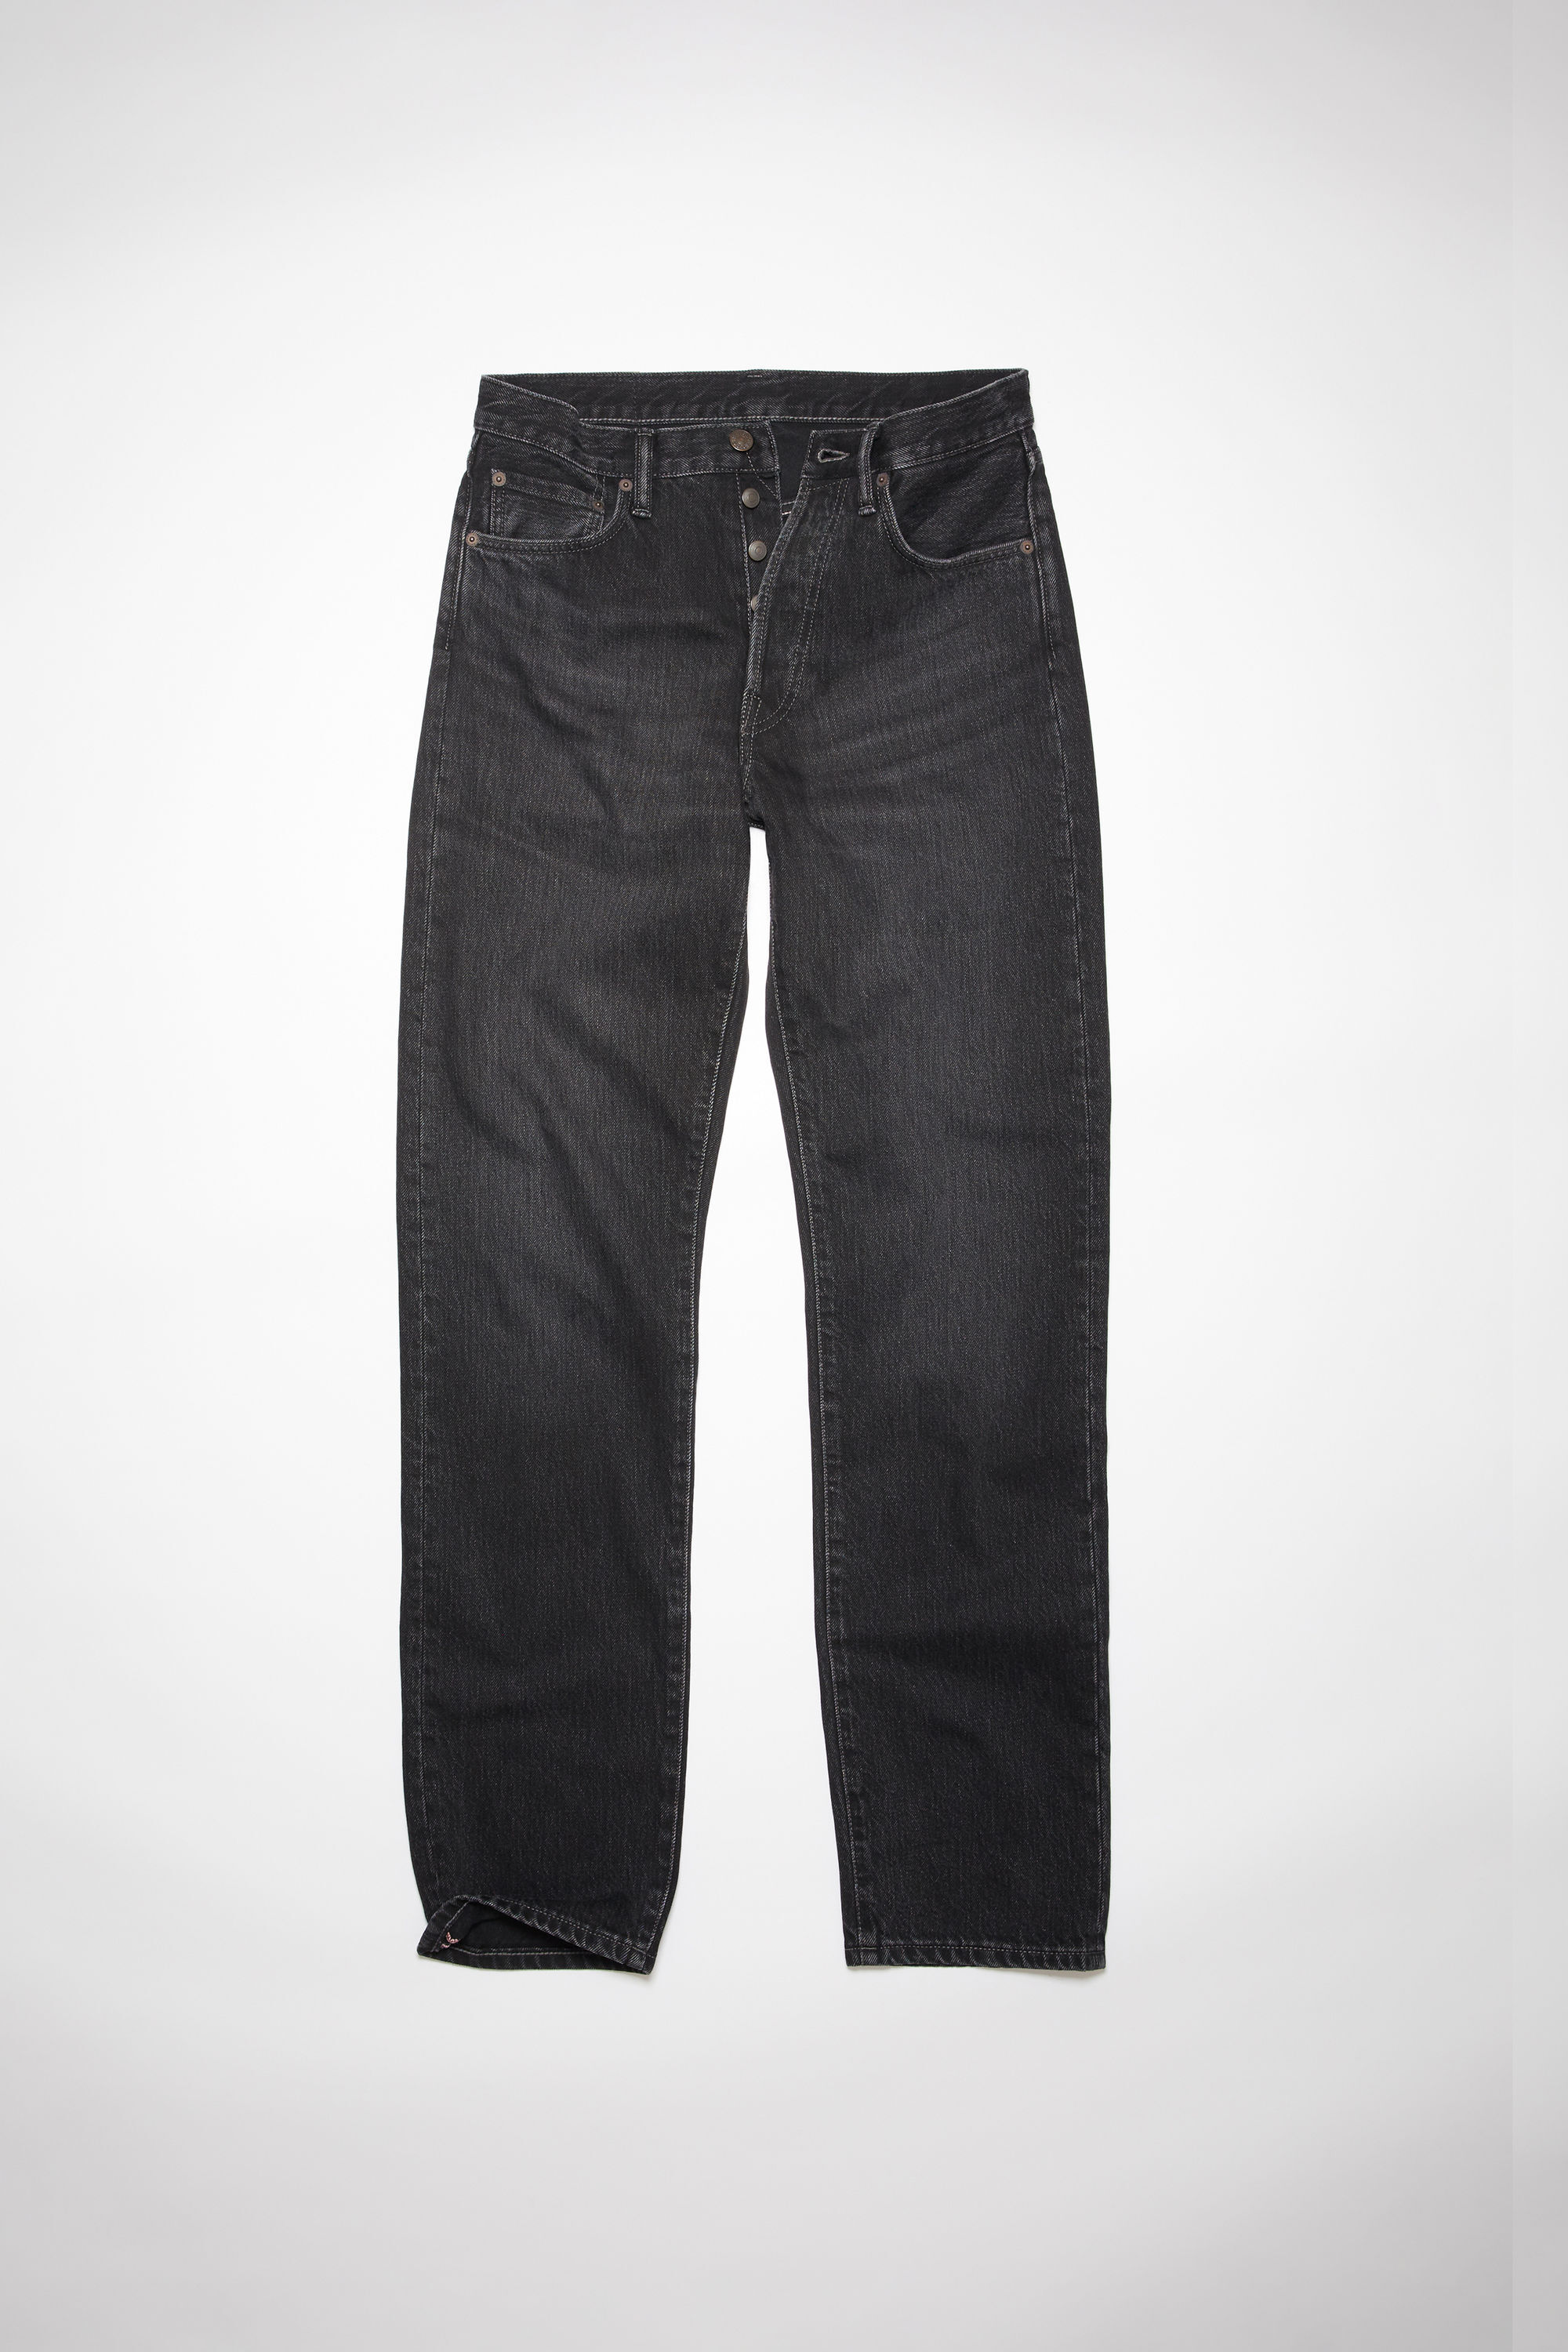 Acne Studios - Regular fit jeans -1996 - Black